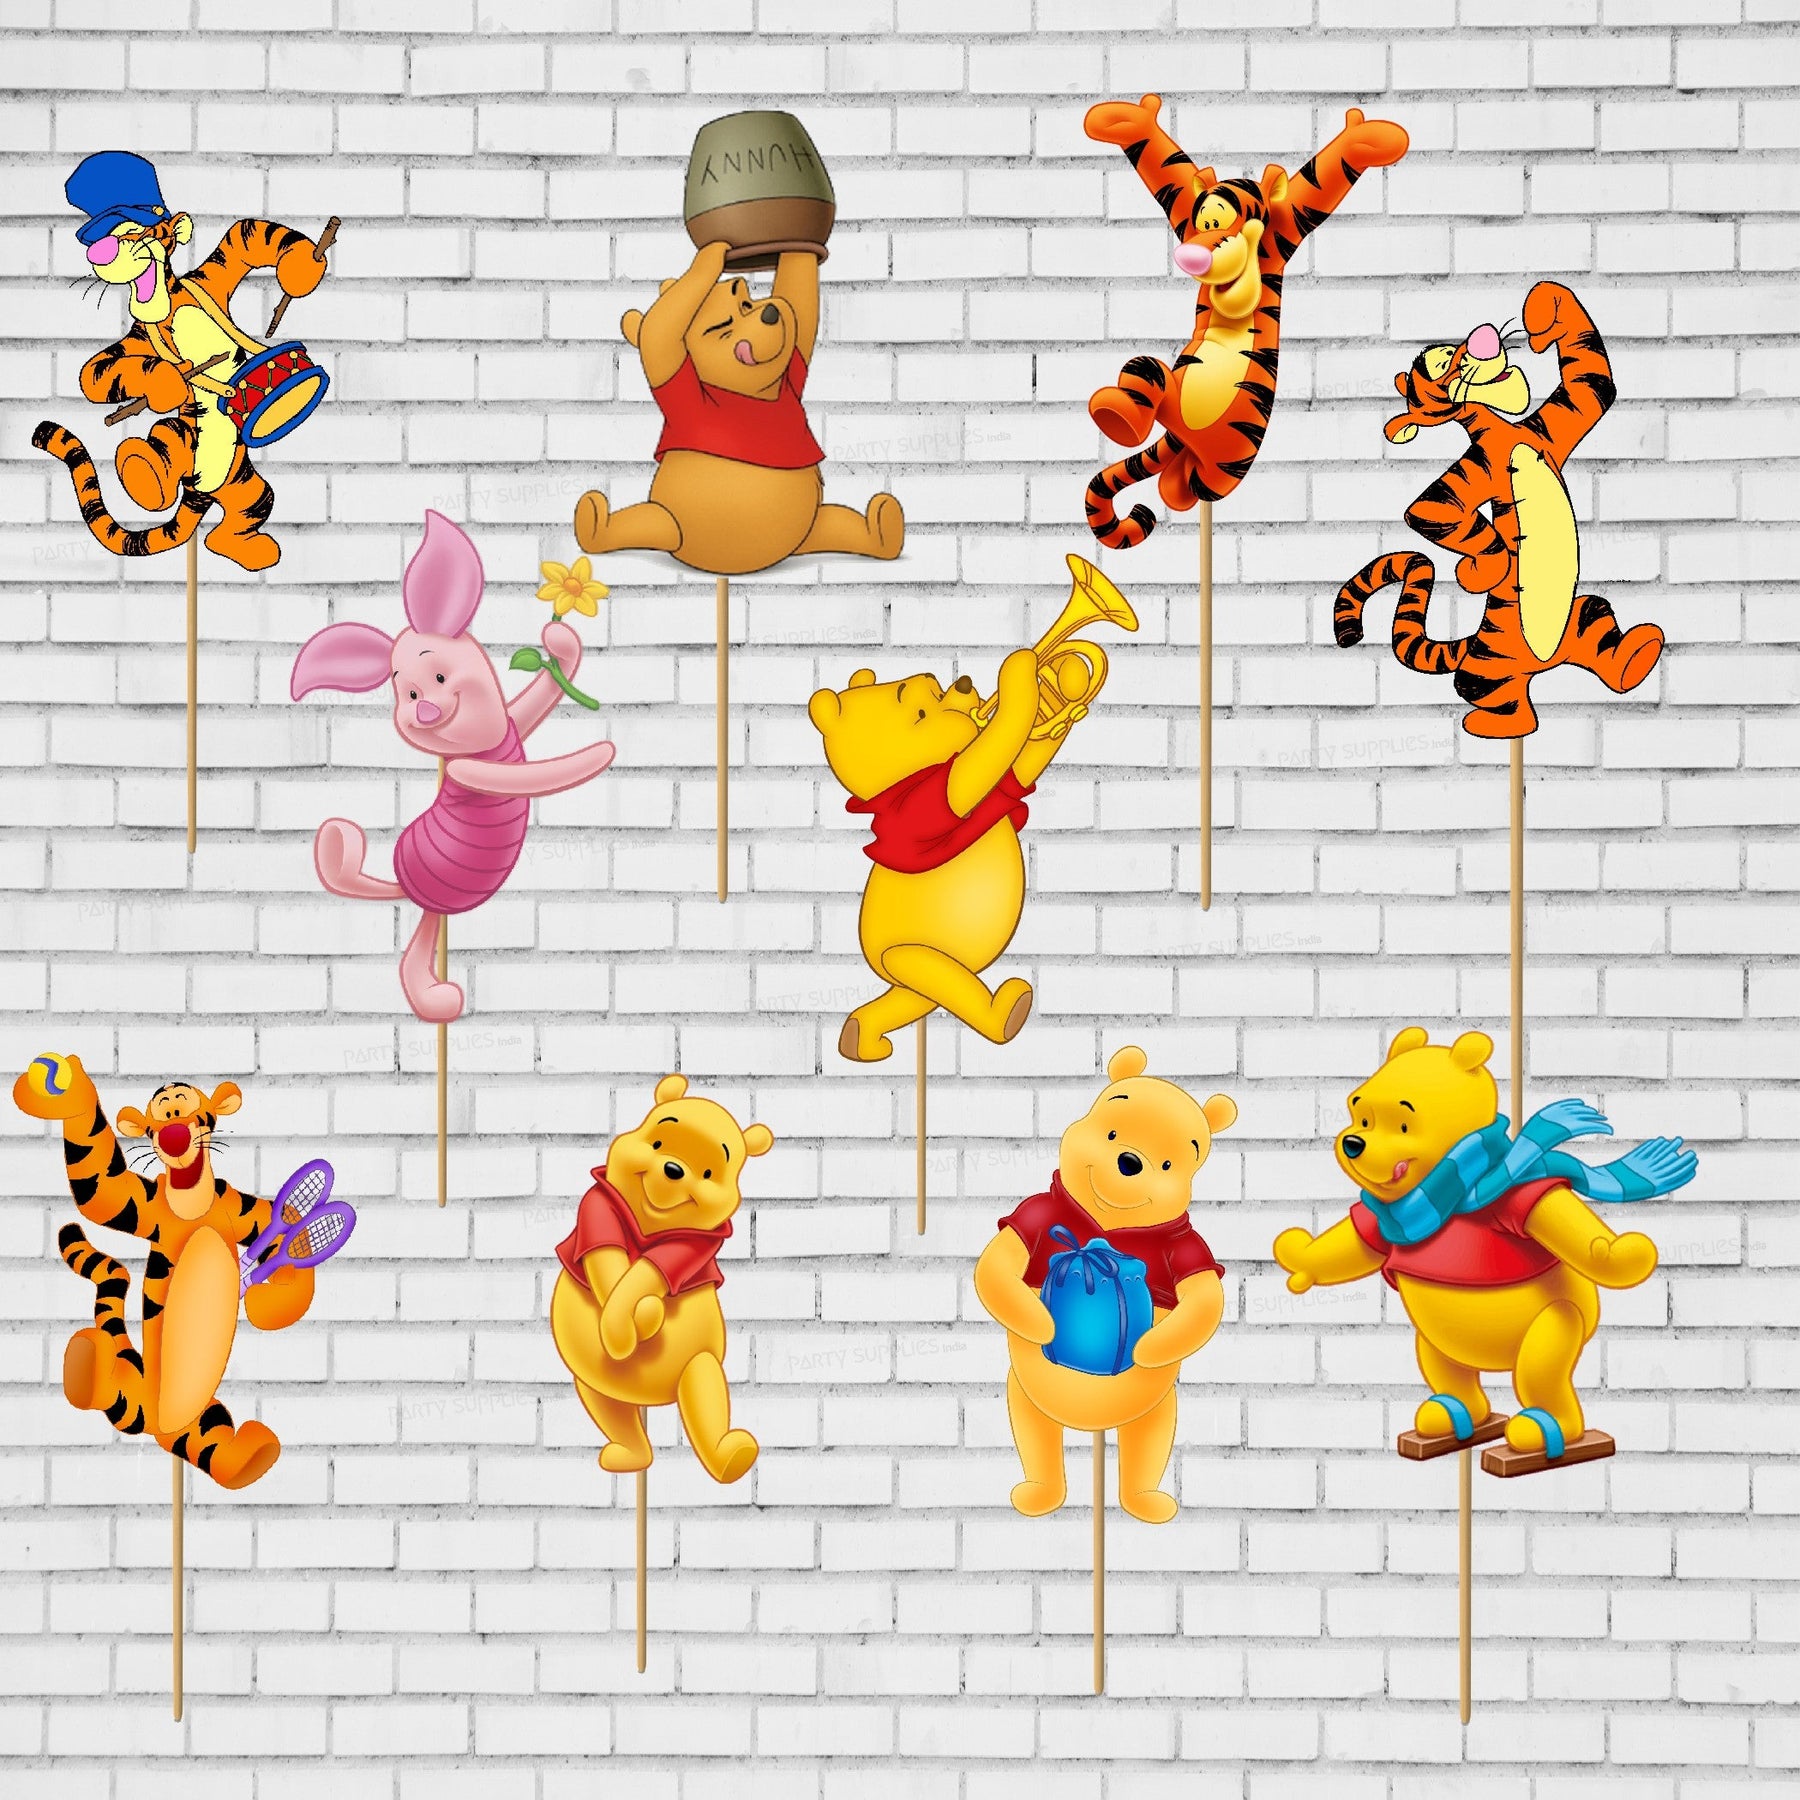 PSI Winnie the Pooh Theme Props